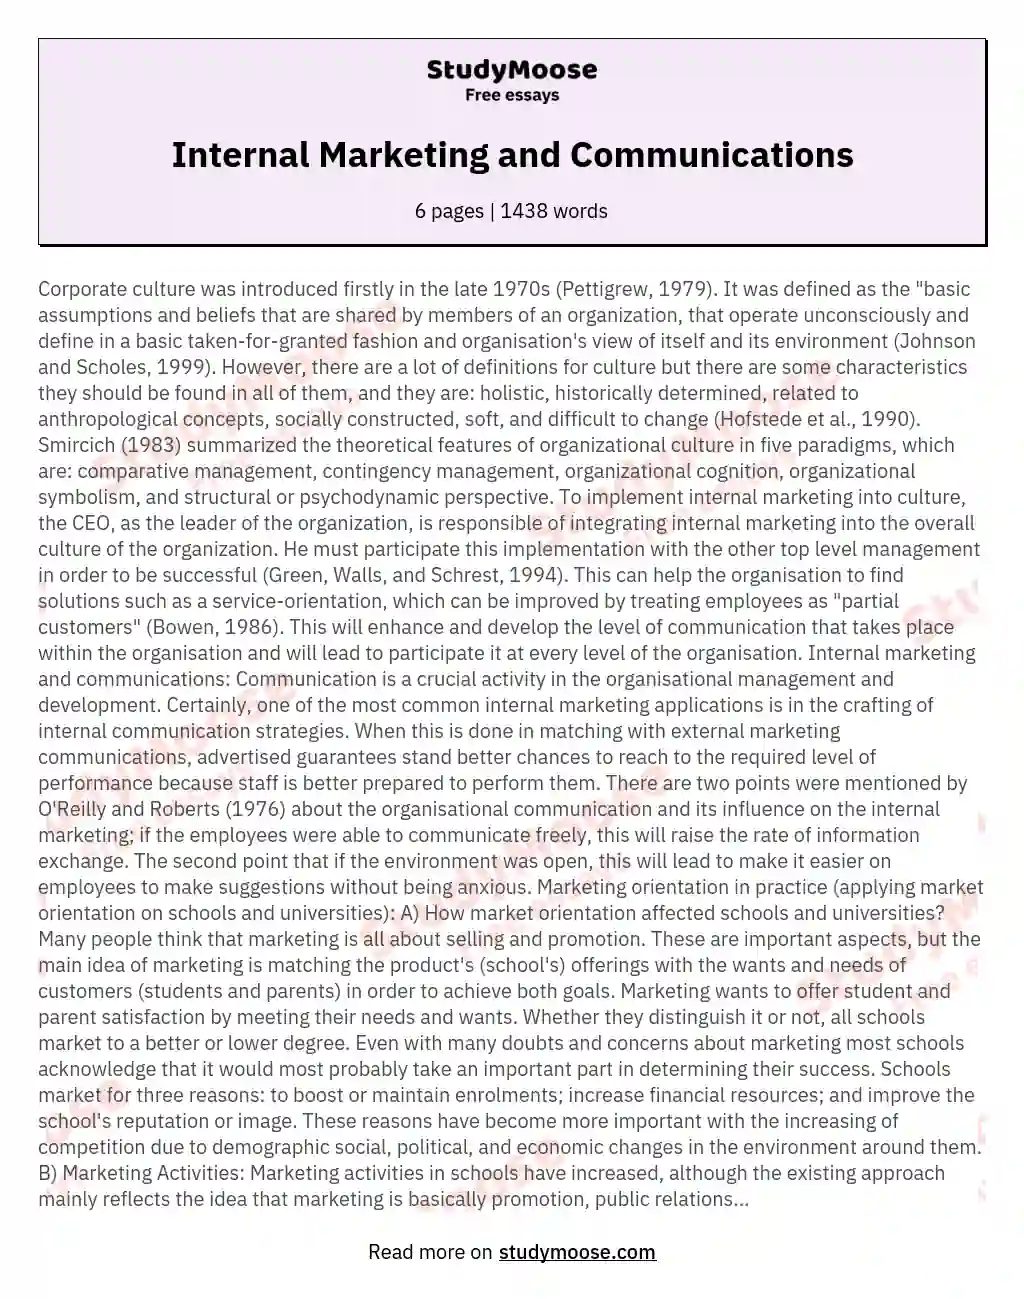 Internal Marketing and Communications essay